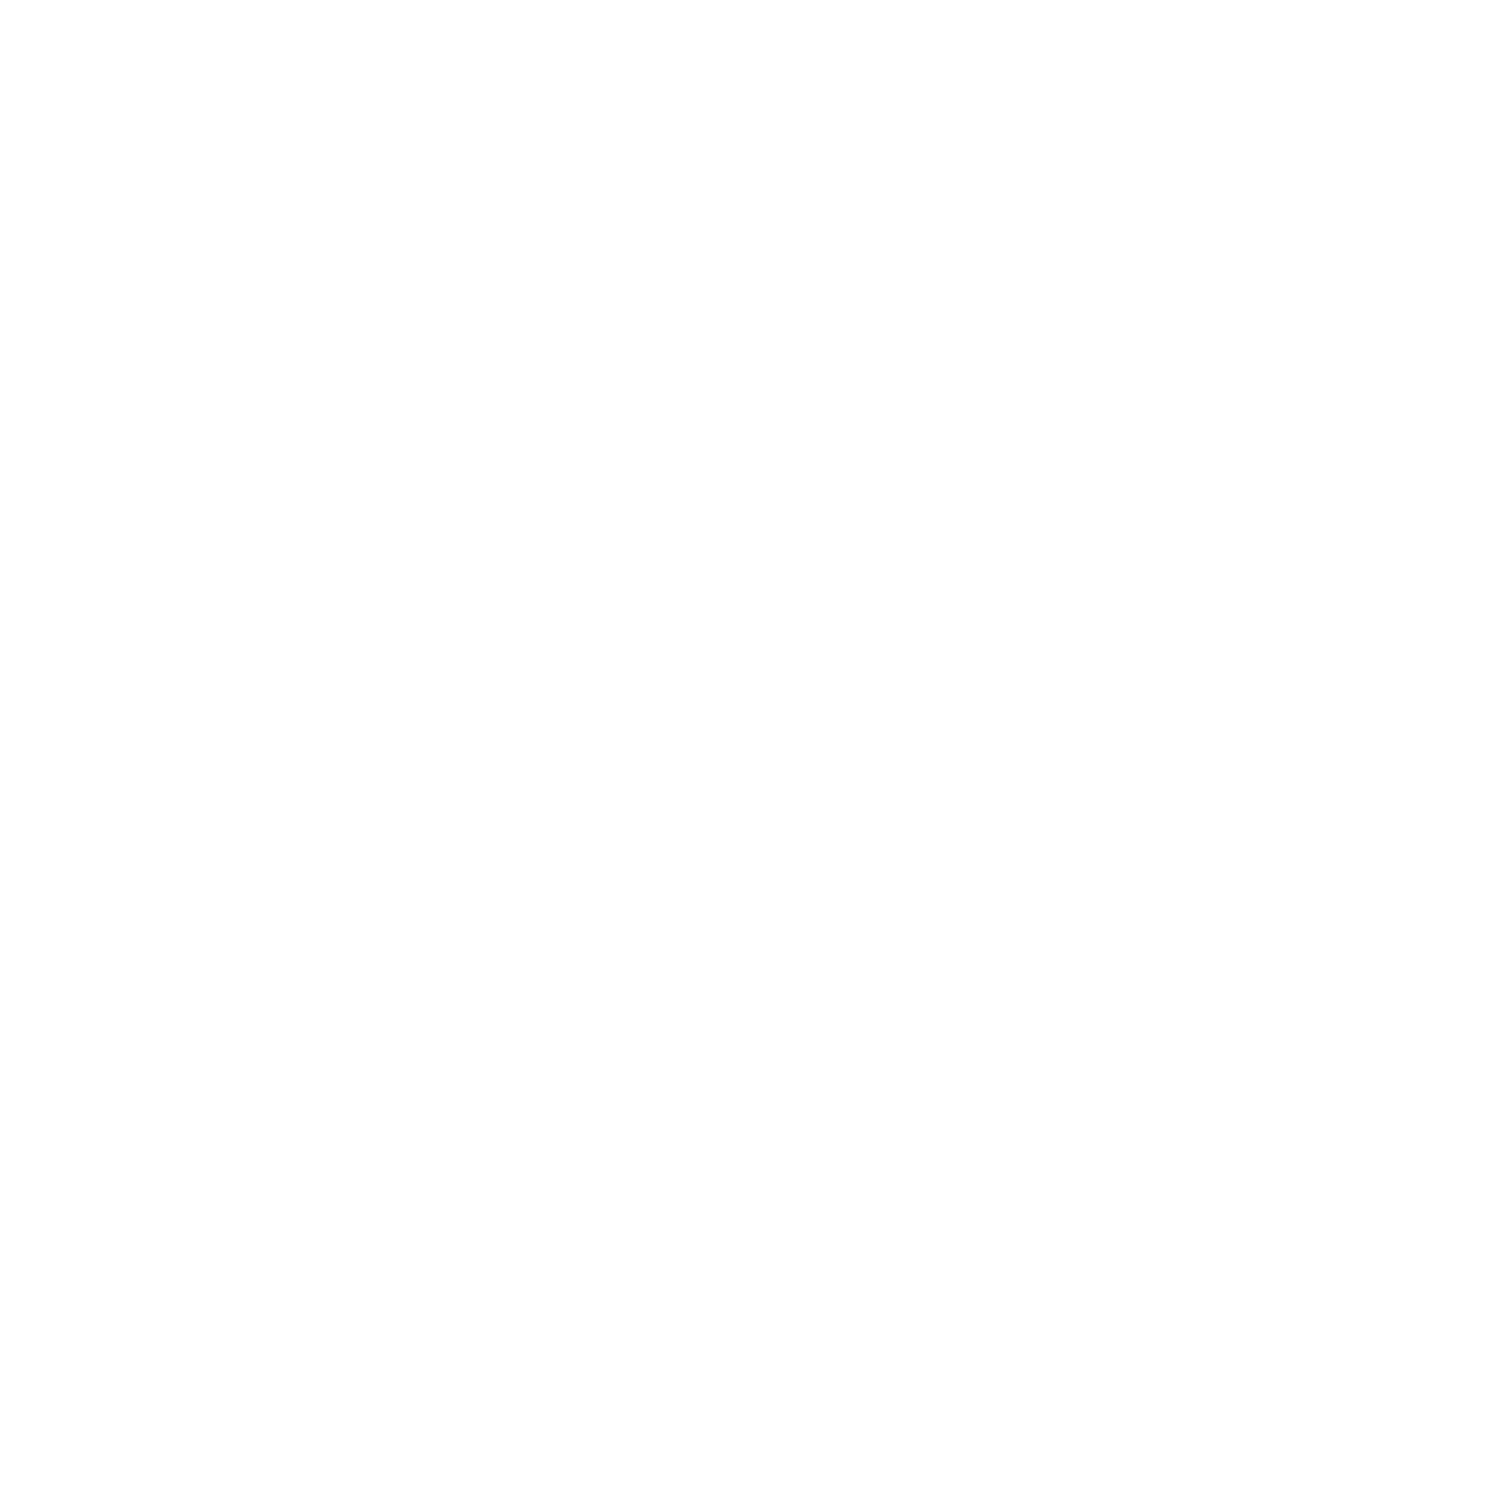 Llamusa